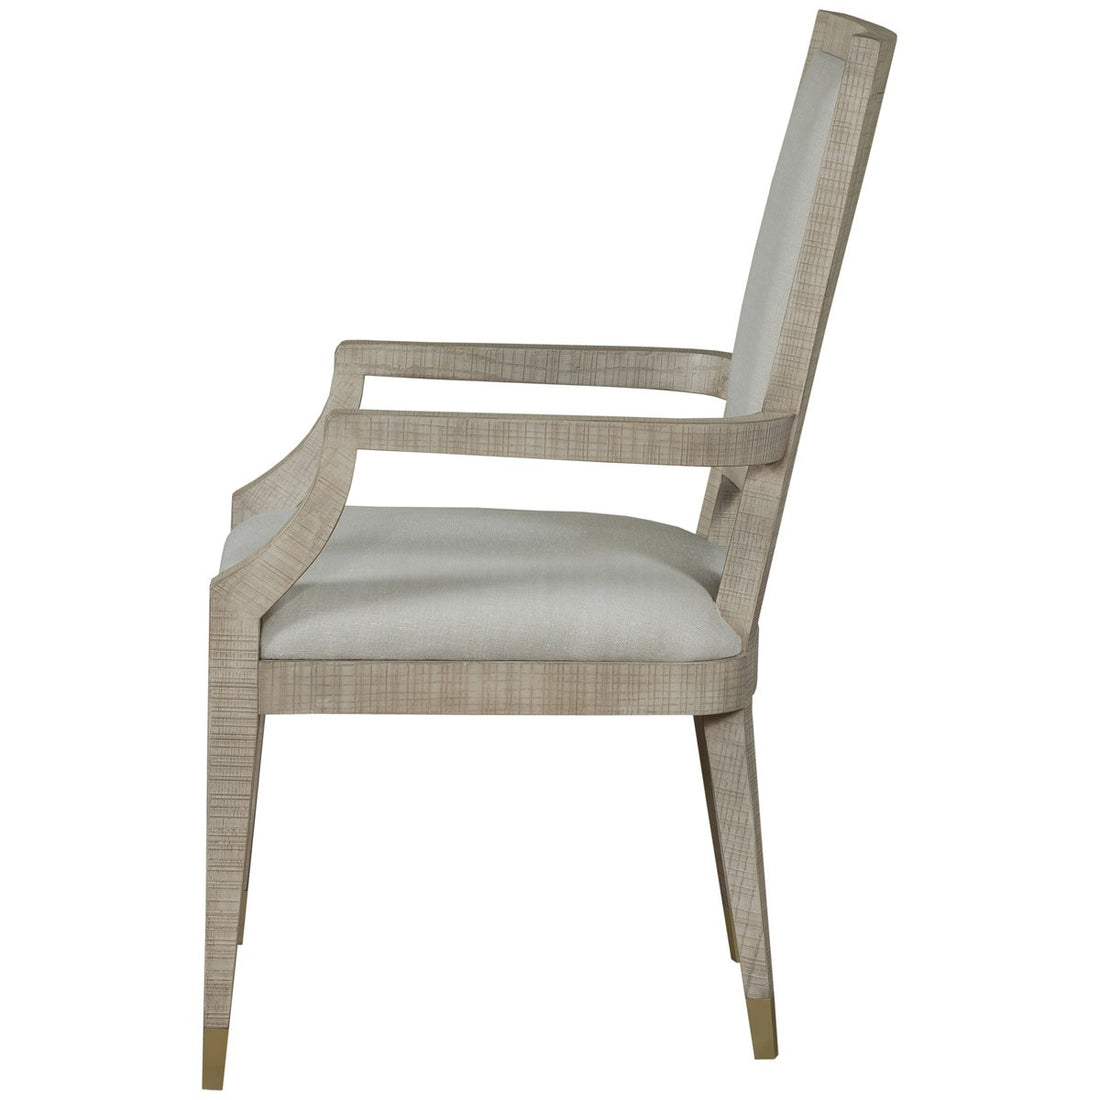 Sonder Living Raffles Dining Arm Chair - Natural, Norman Ivory